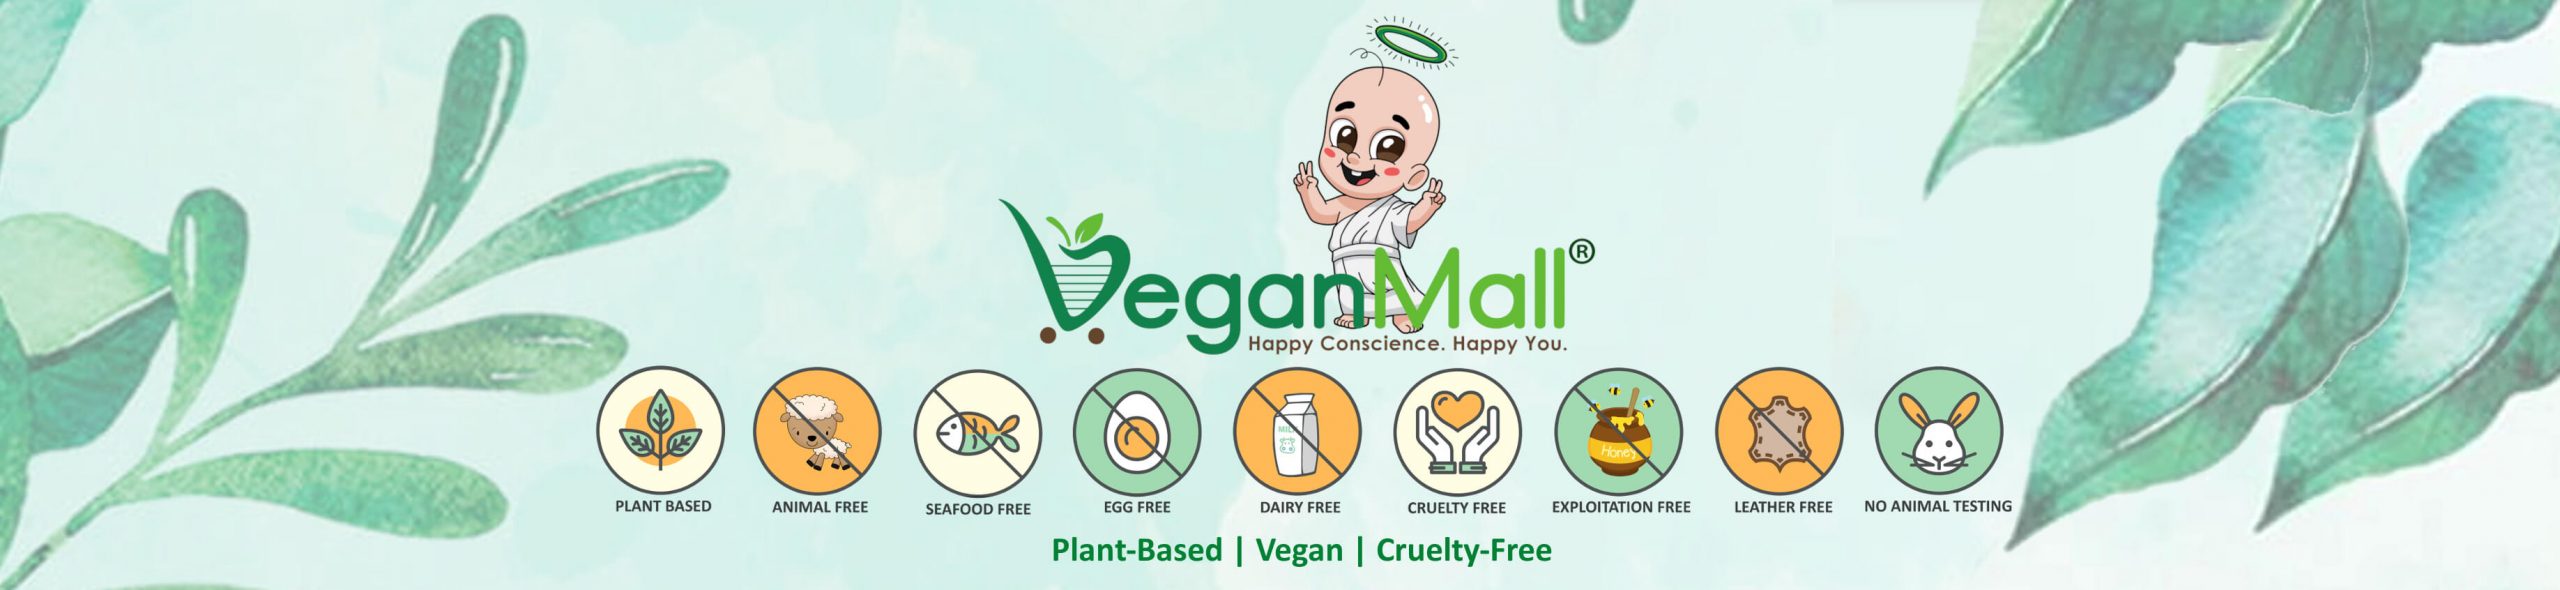 VeganMall Homepage - Plant Based | Vegan | Cruelty Free (Slider)